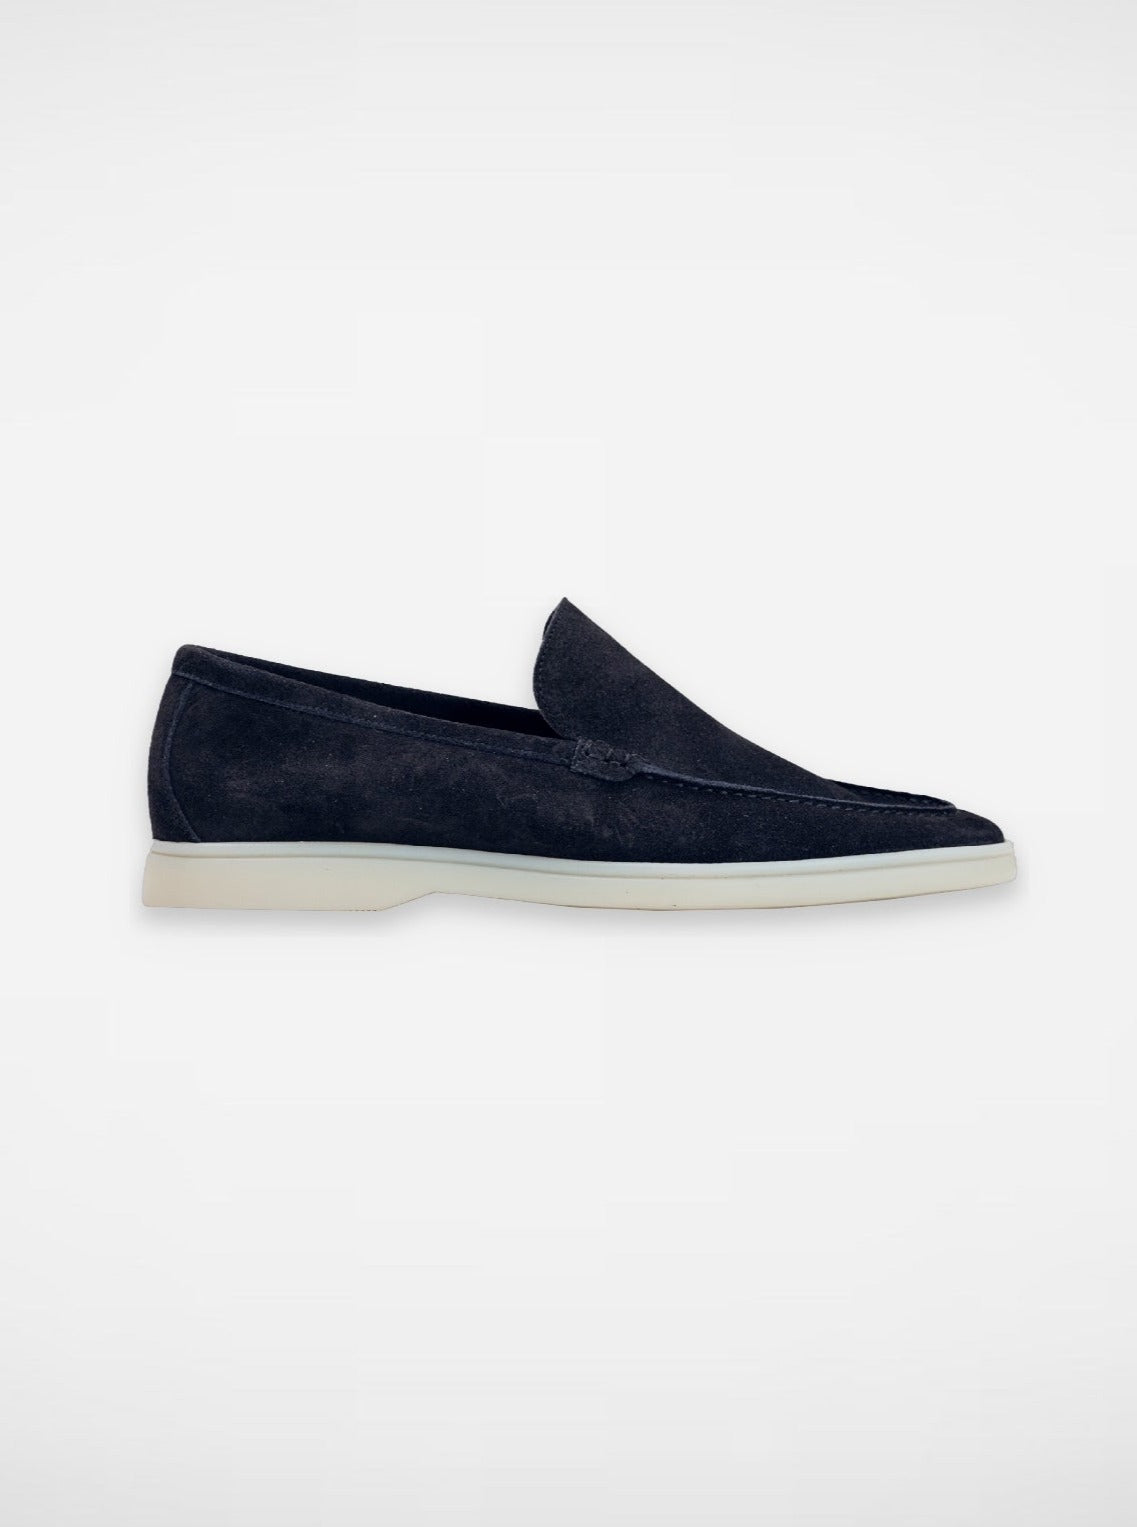 Mersino Originale | Suede Blauw Loafers